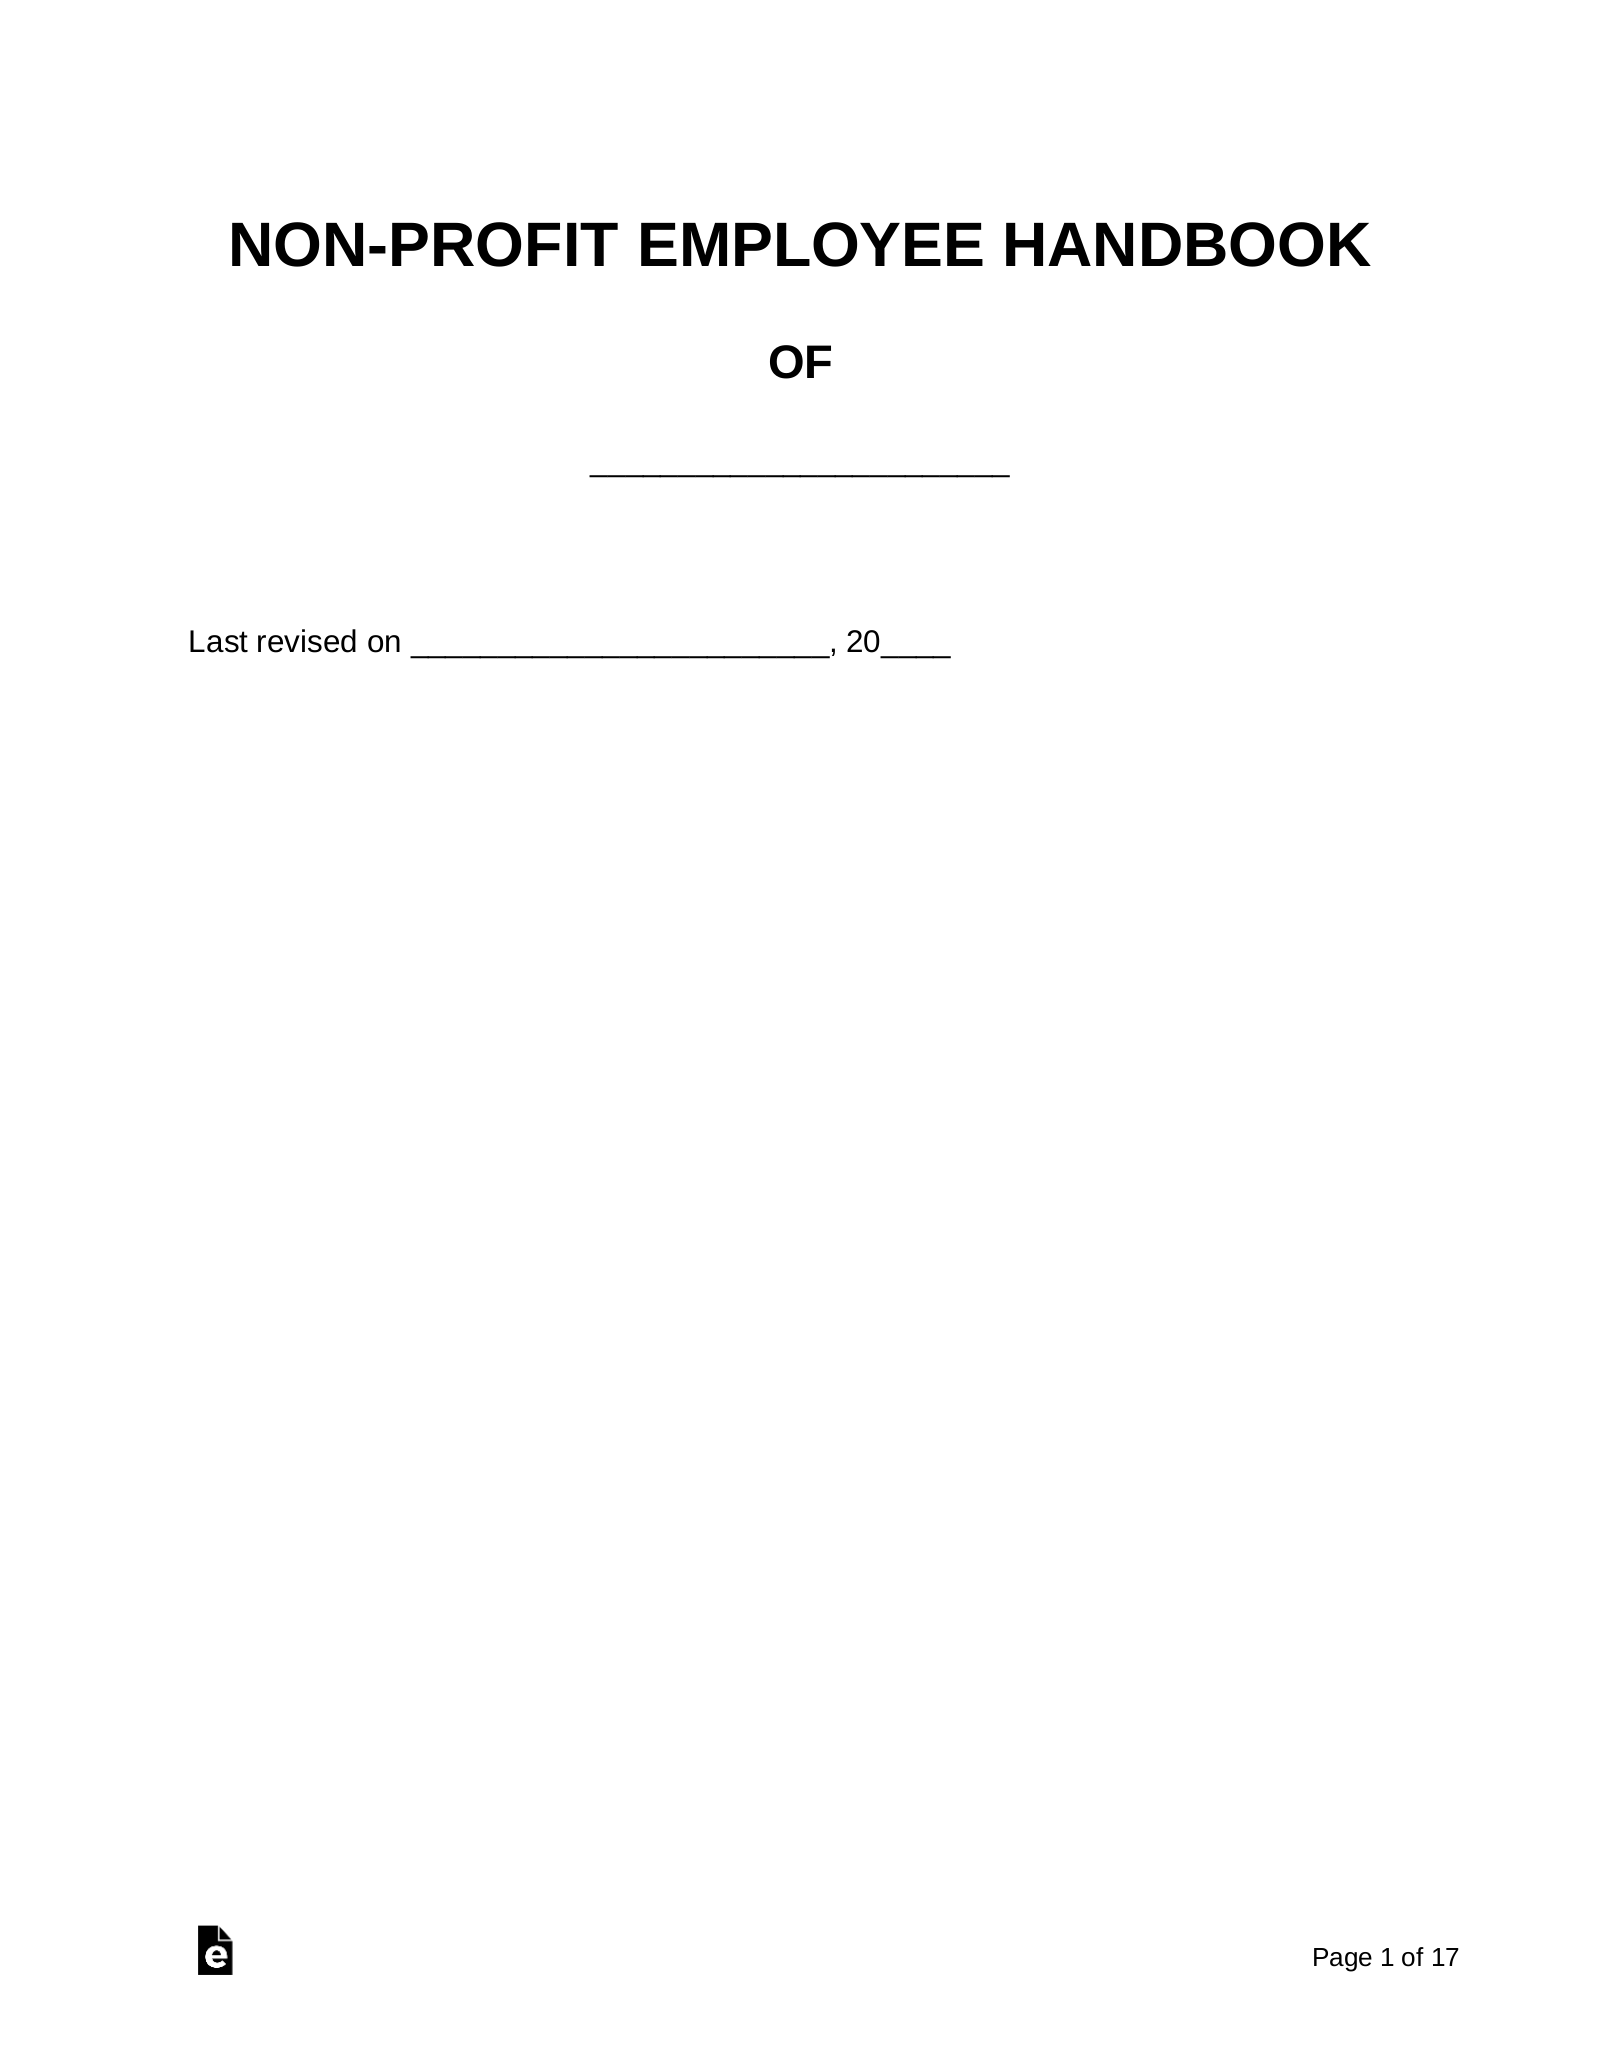 Non-Profit Organization Employee Handbook